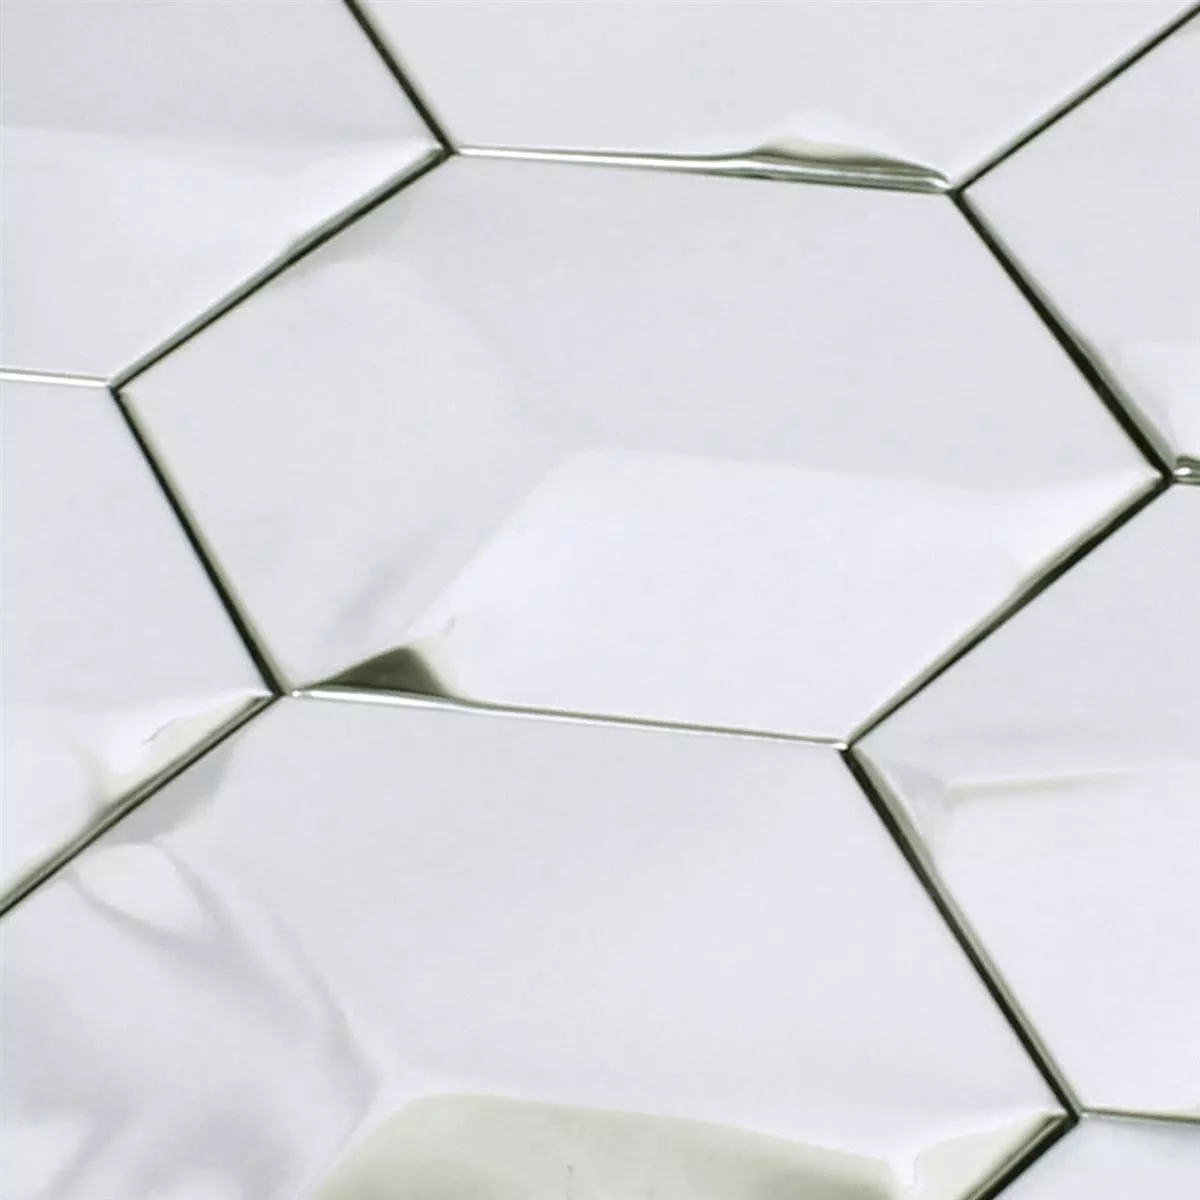 Sample Mosaic Tiles Stainless Steel Contender Hexagon Glossy